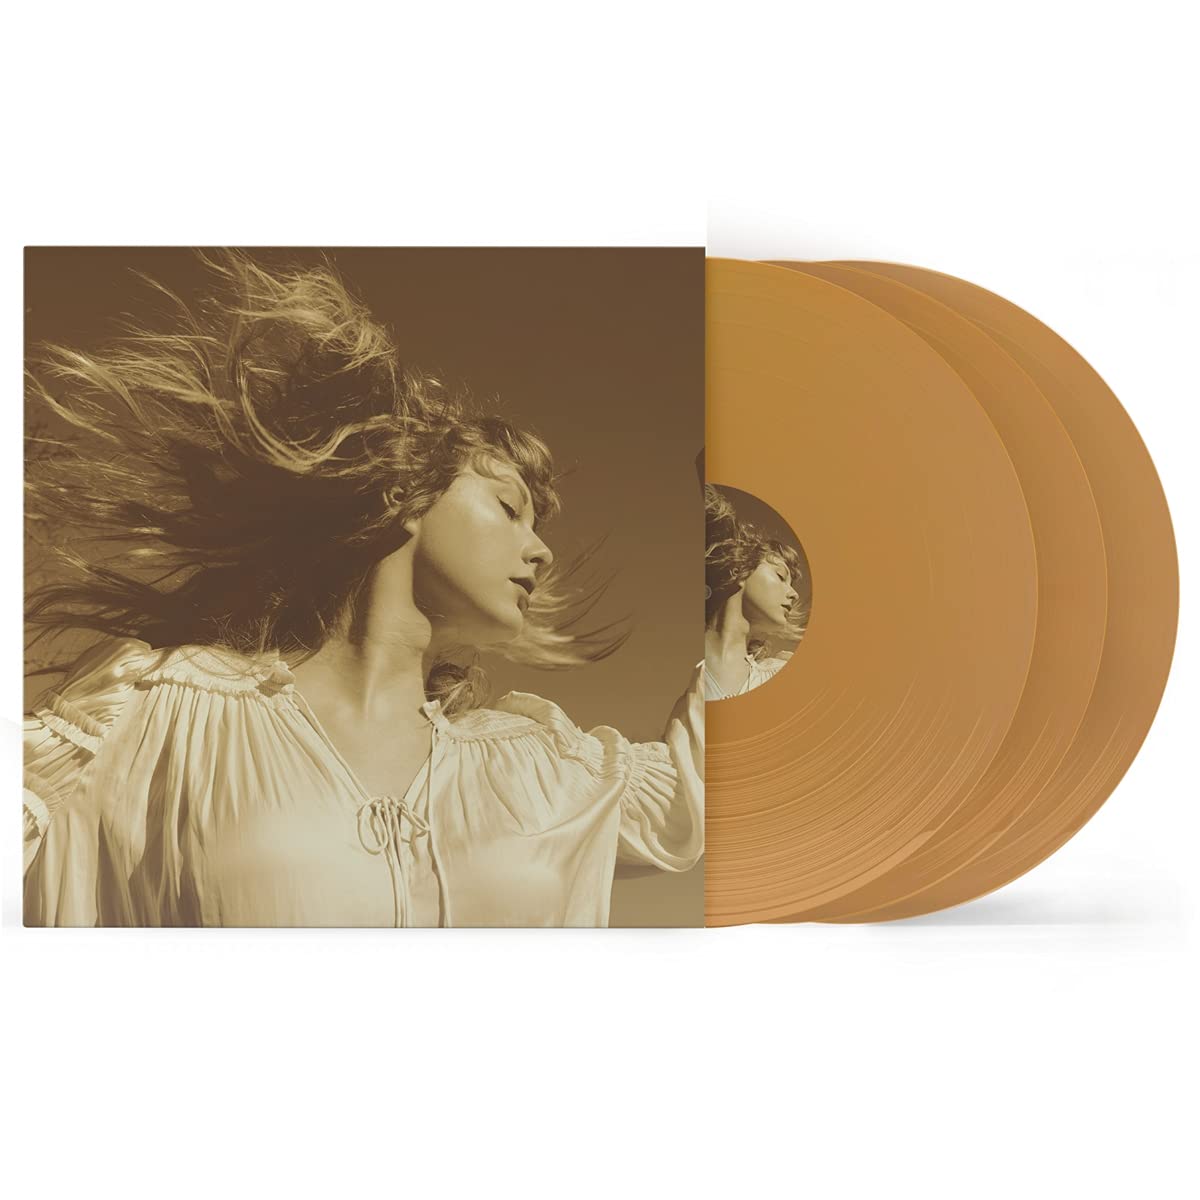 Vinyl-LP Taylor Swift-Fearless (Taylor's Version) (Ltd.)